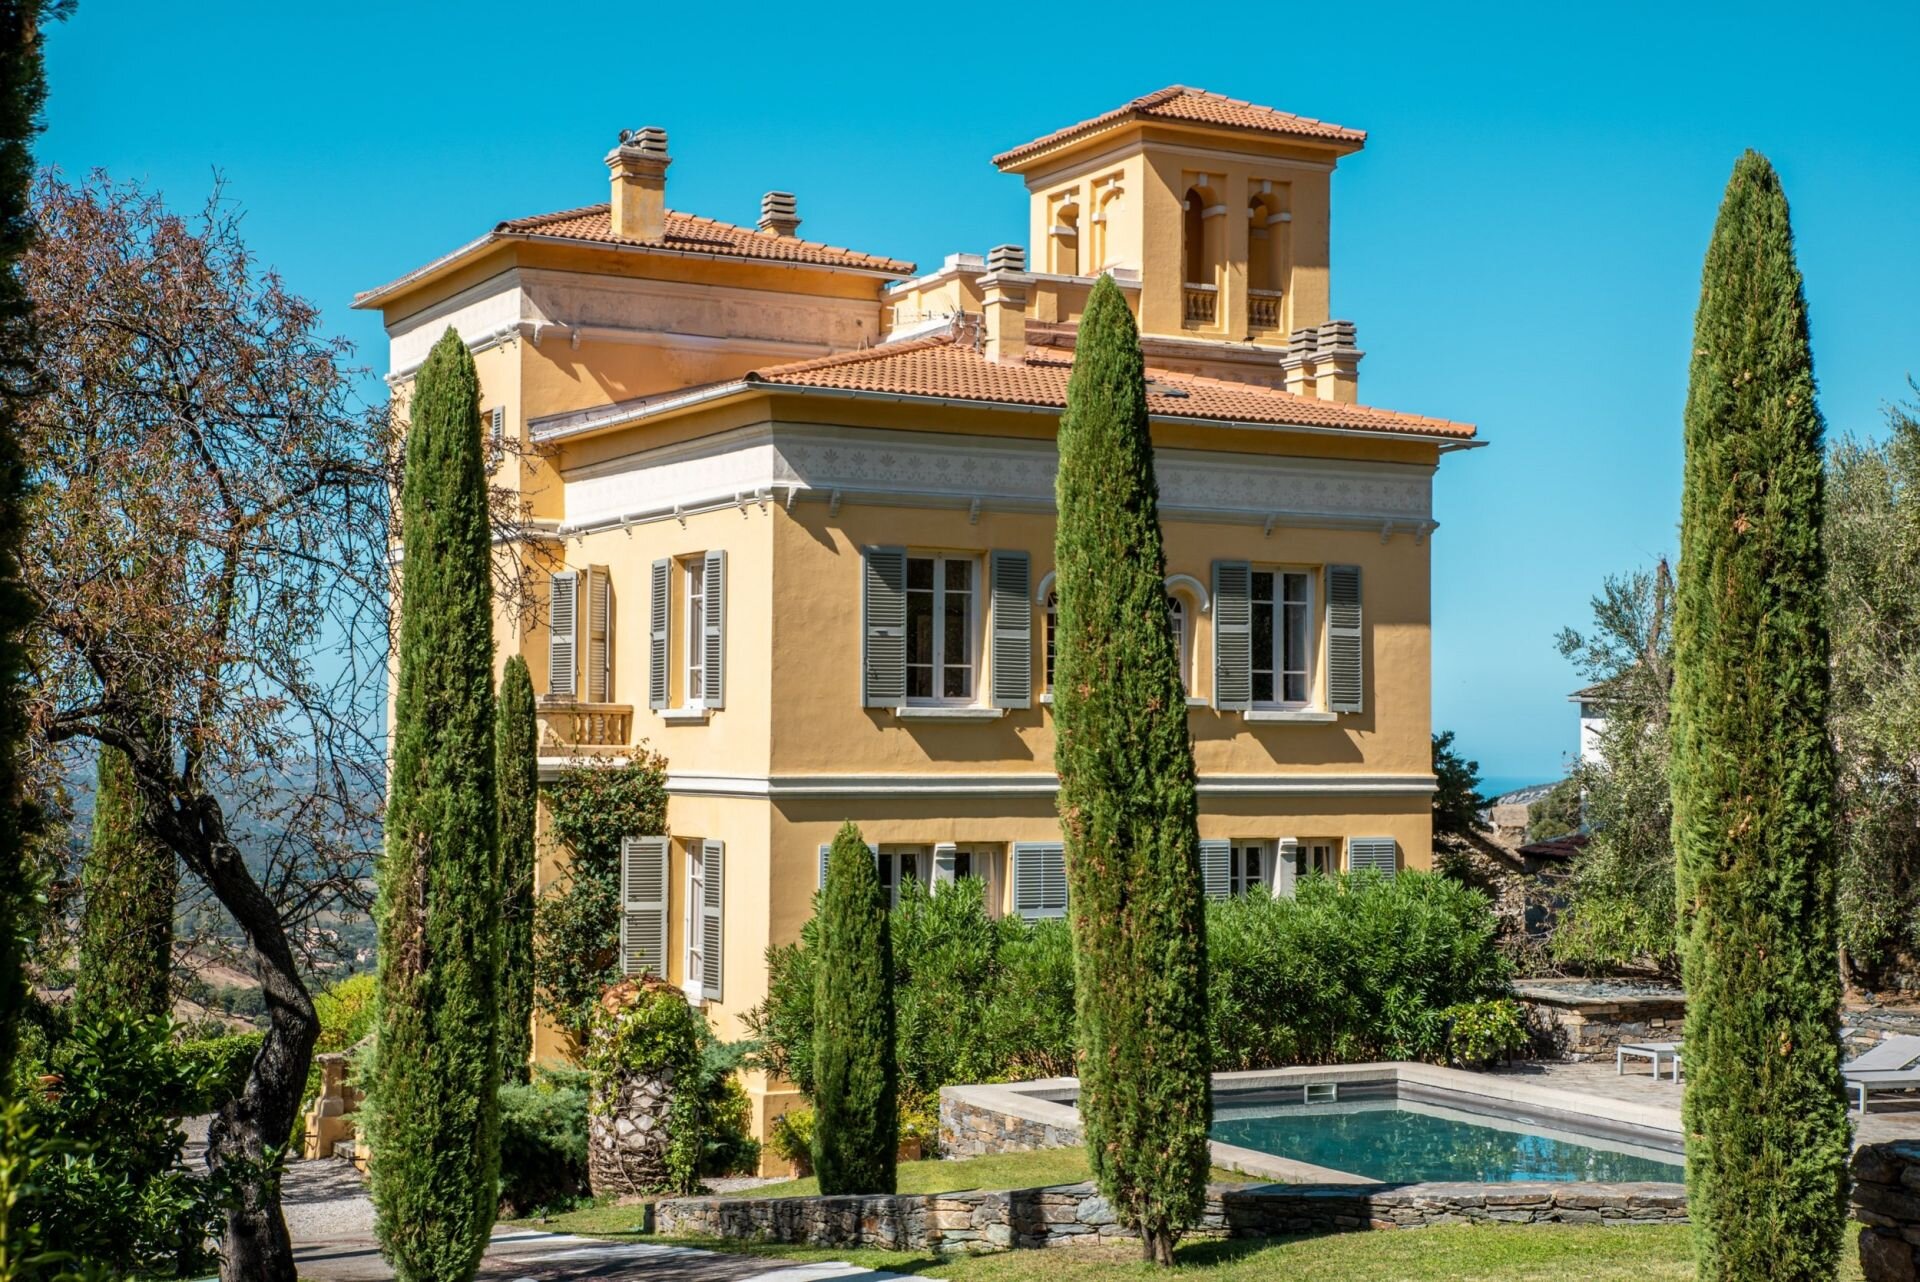 Francis York Florentine Palace in Corsica2.jpg